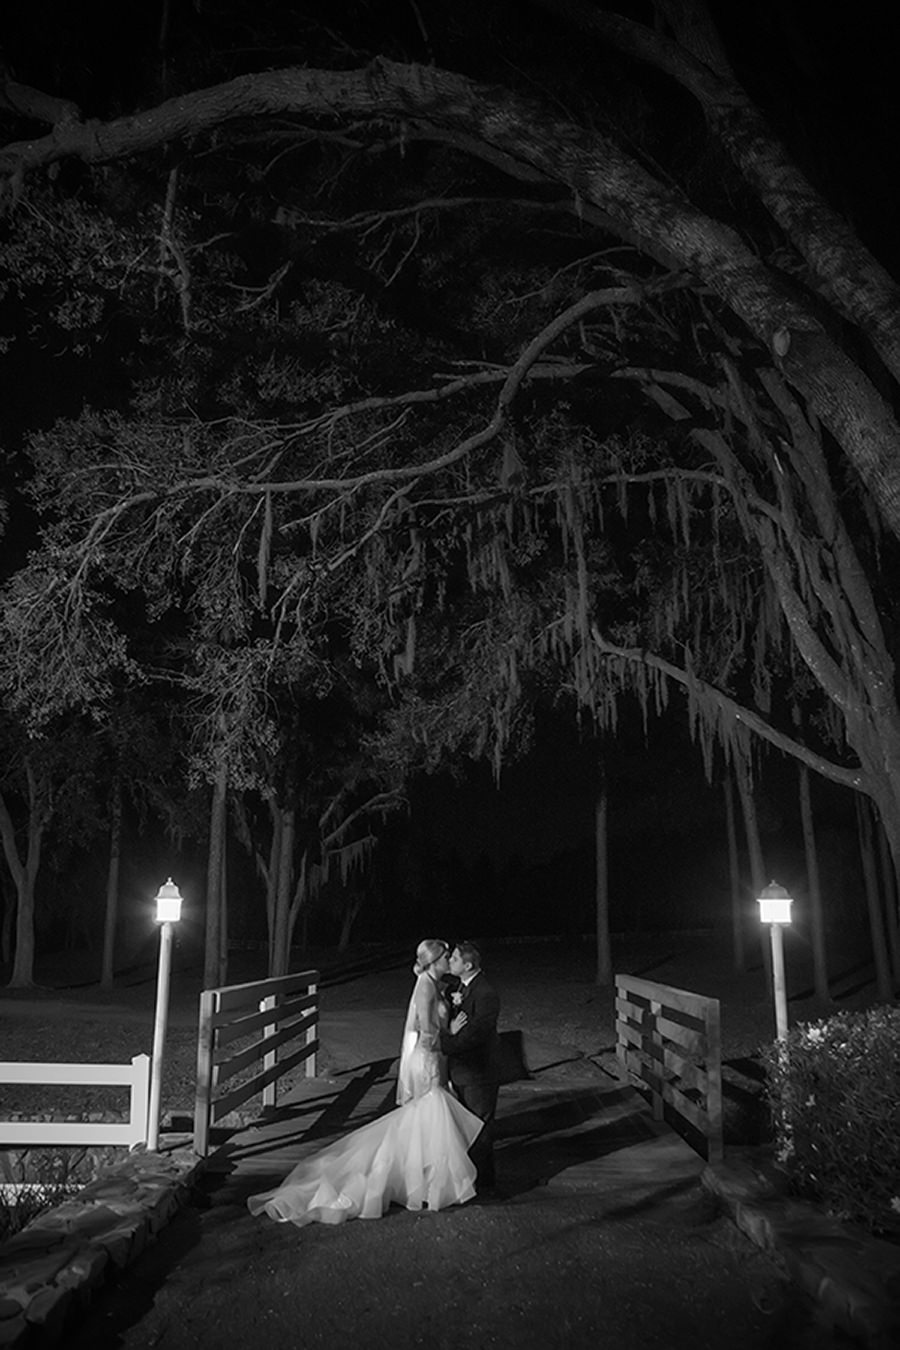 Nighttime Outdoor Bride and Groom Portrait | Tampa Bay Wedding Venue The Lange Farm | Photographer Brian C Idocks Photographics